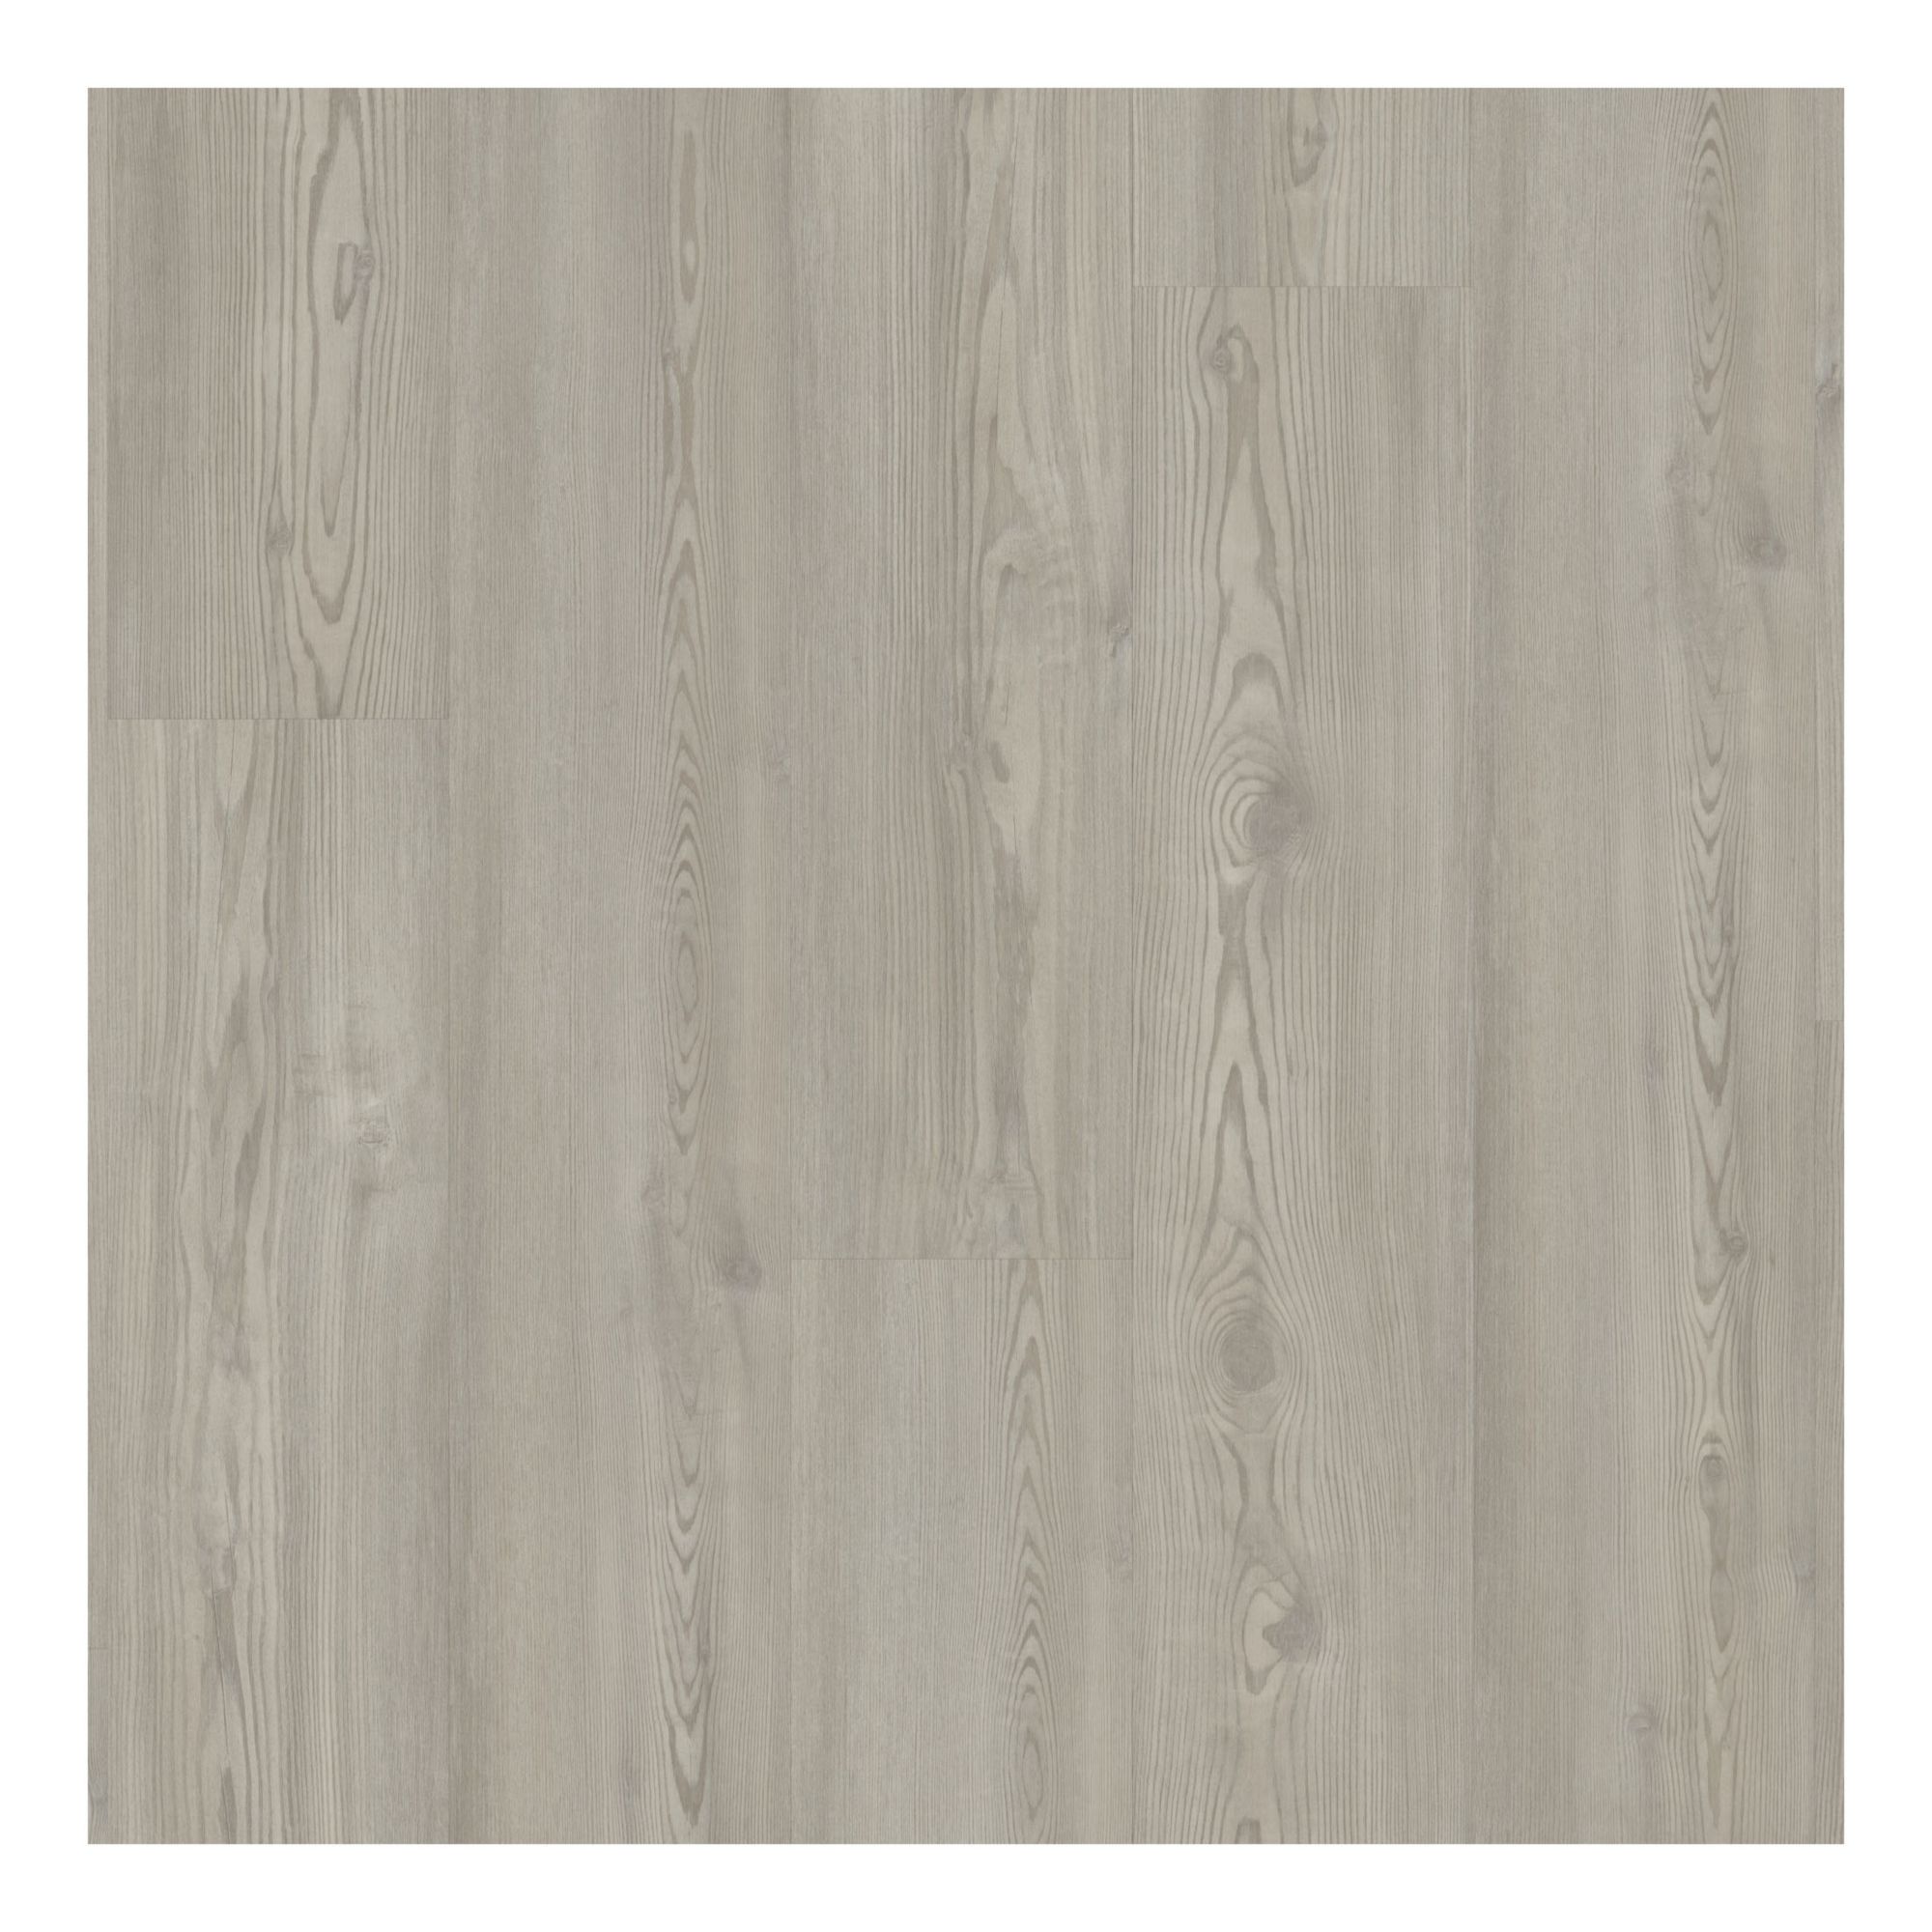 Shaw Floors Danvers Vinyl Plank Flooring, 12 ct. - Smokey Pine $2.70/sq. ft.